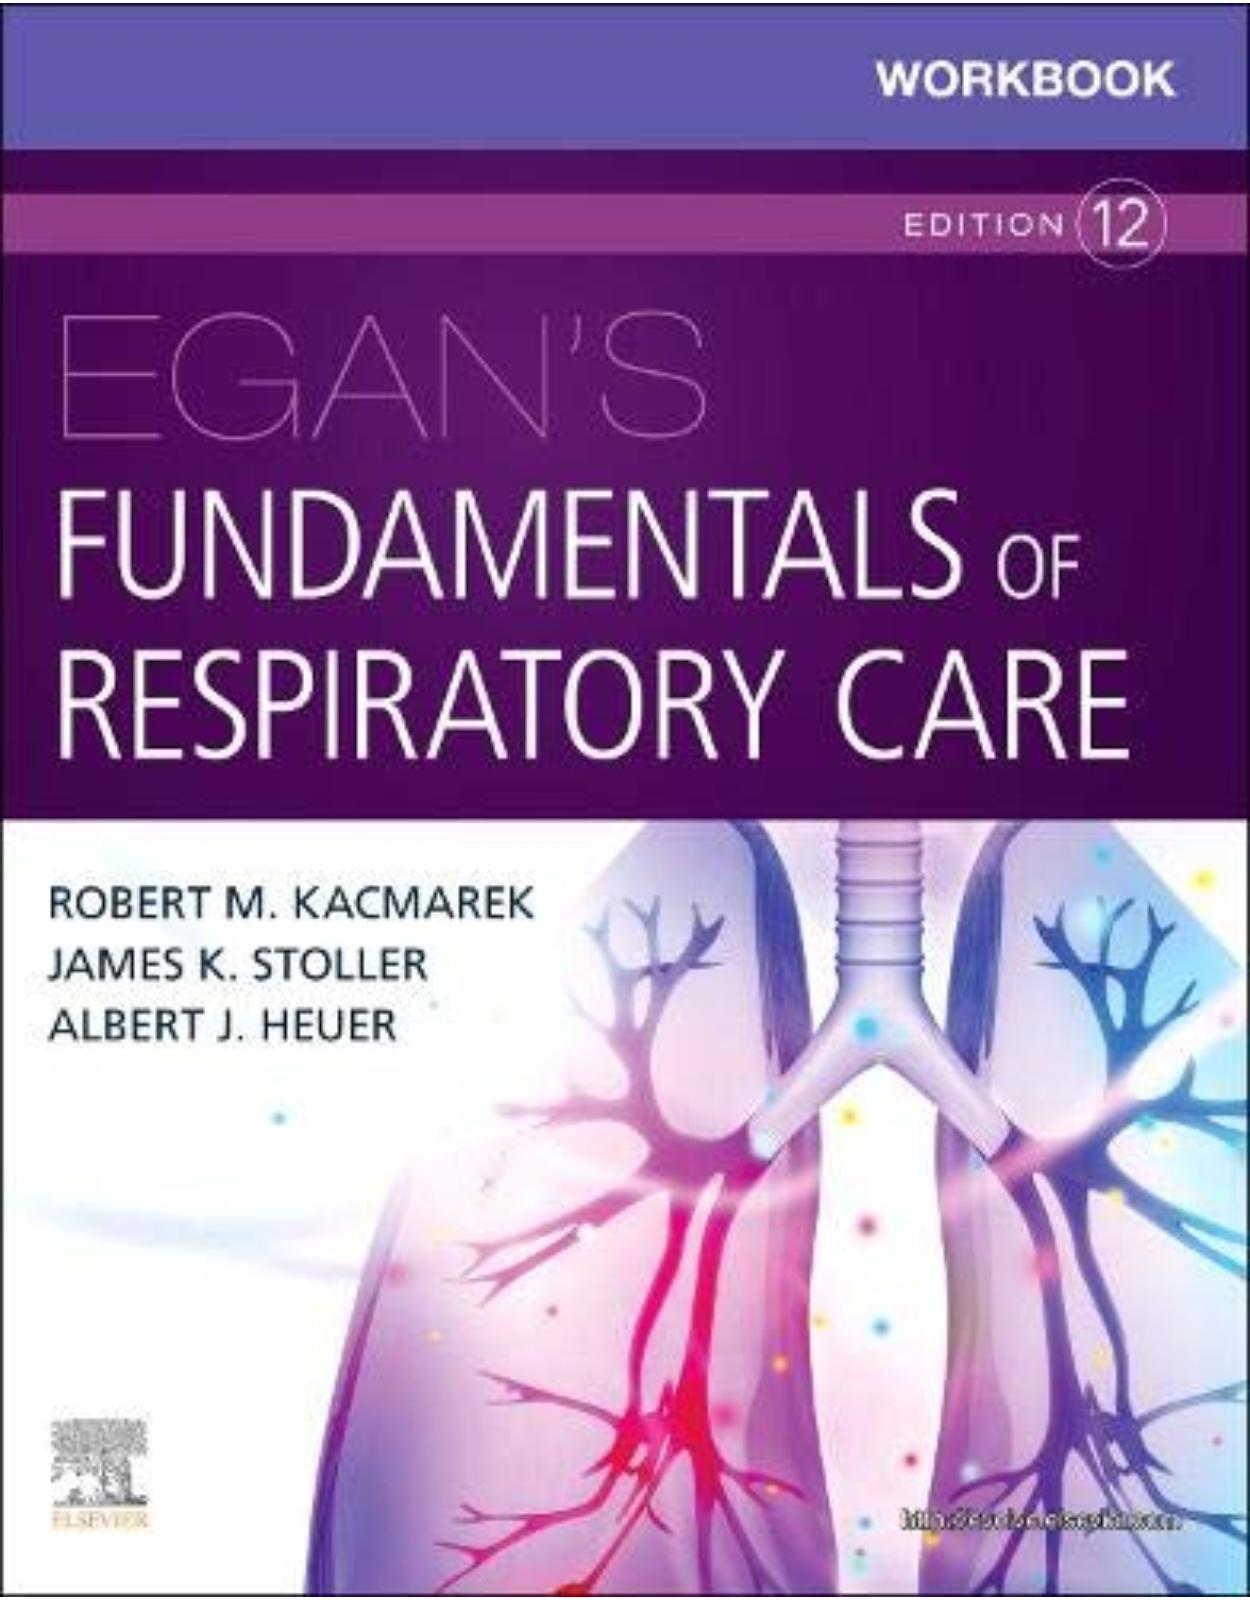 Workbook for Egan's Fundamentals of Respiratory Care 